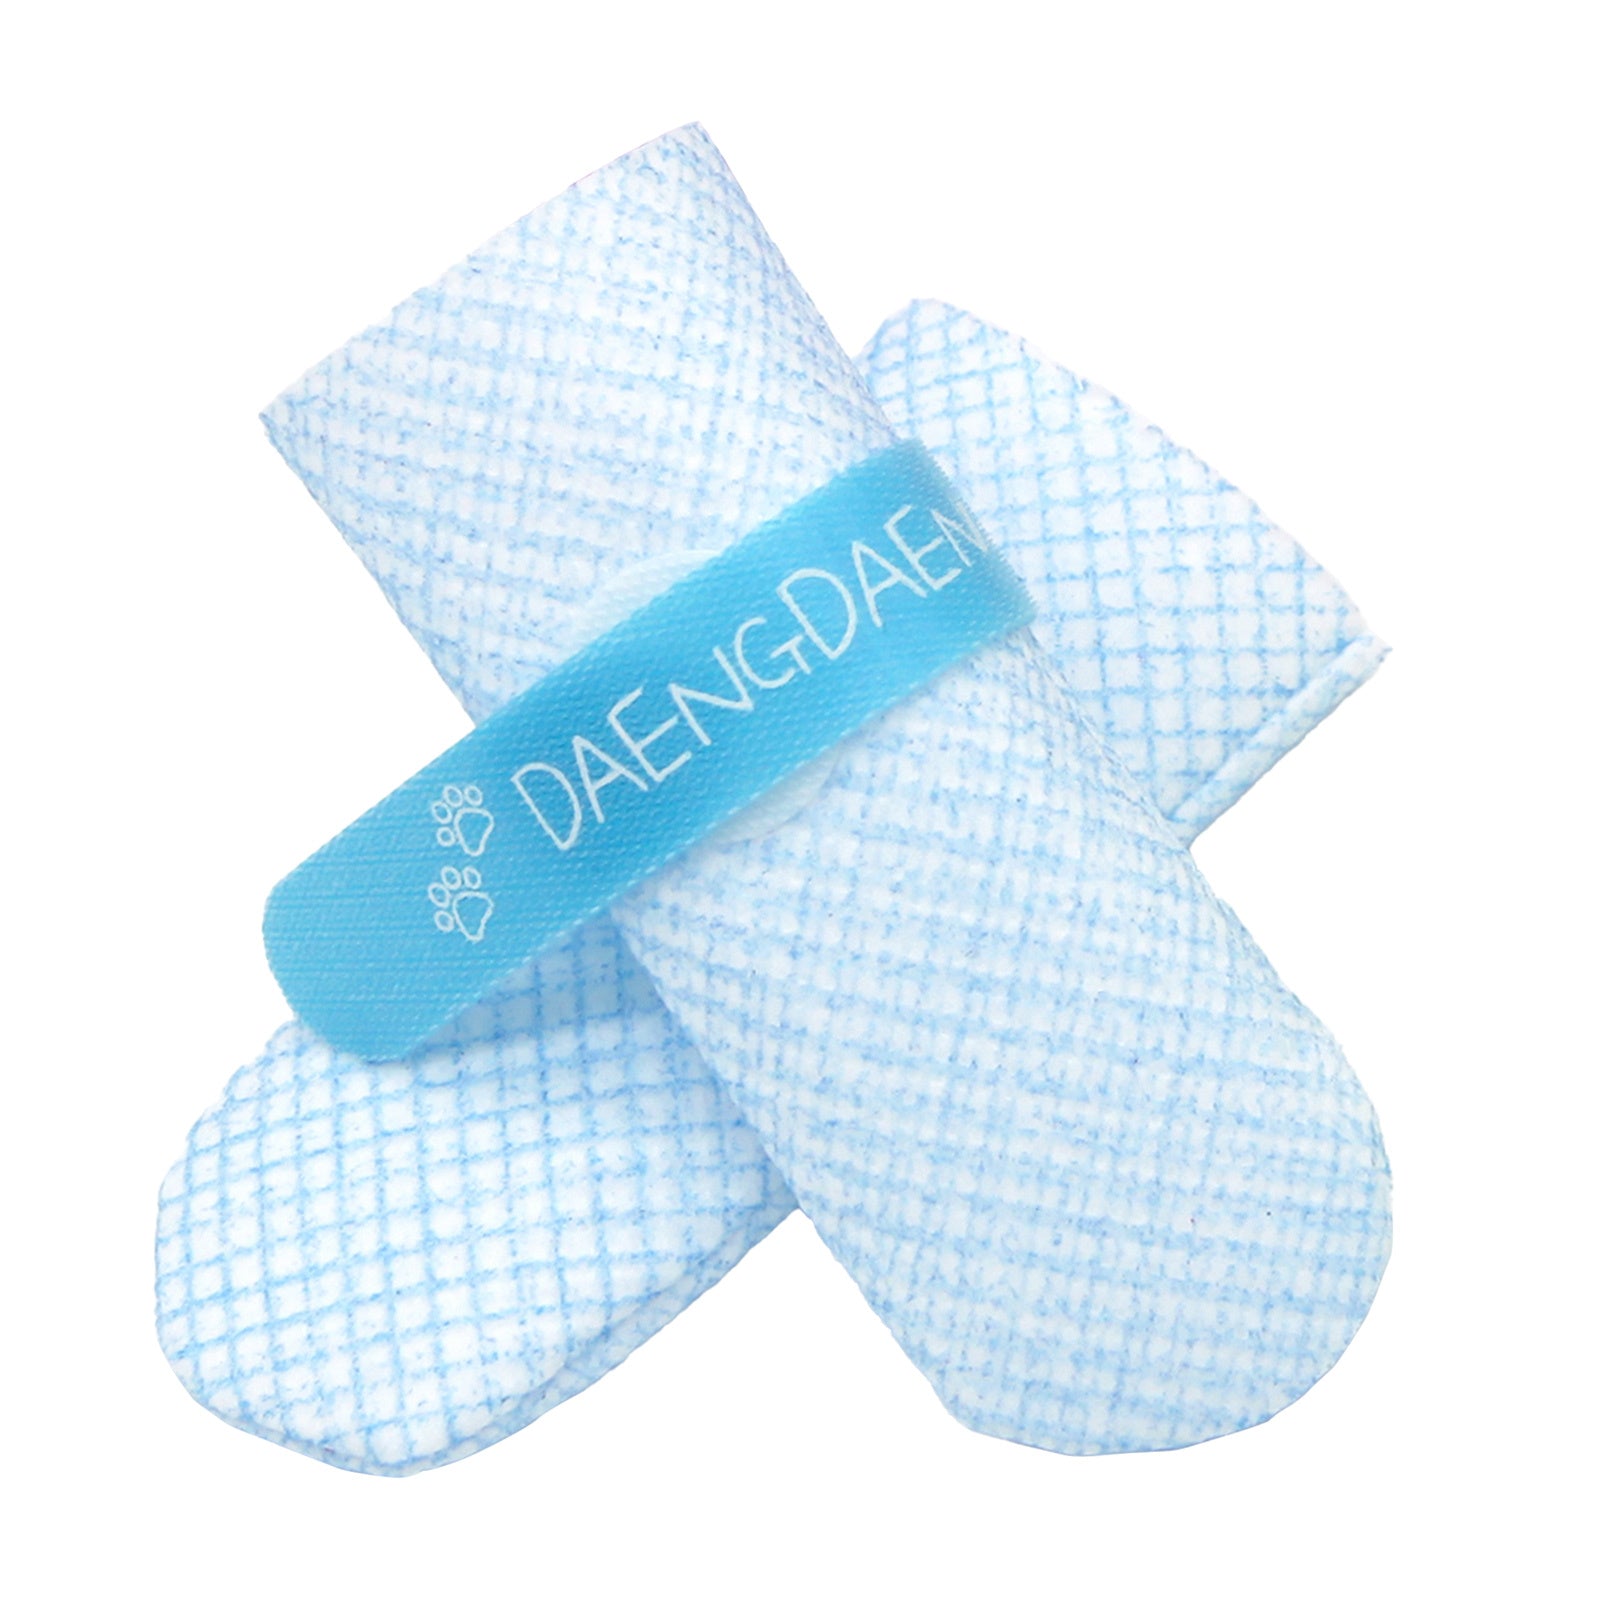 Daeng Daeng Shoes 28pc M Blue Dog Shoes Waterproof Disposable Boots Anti-Slip Socks Deals499